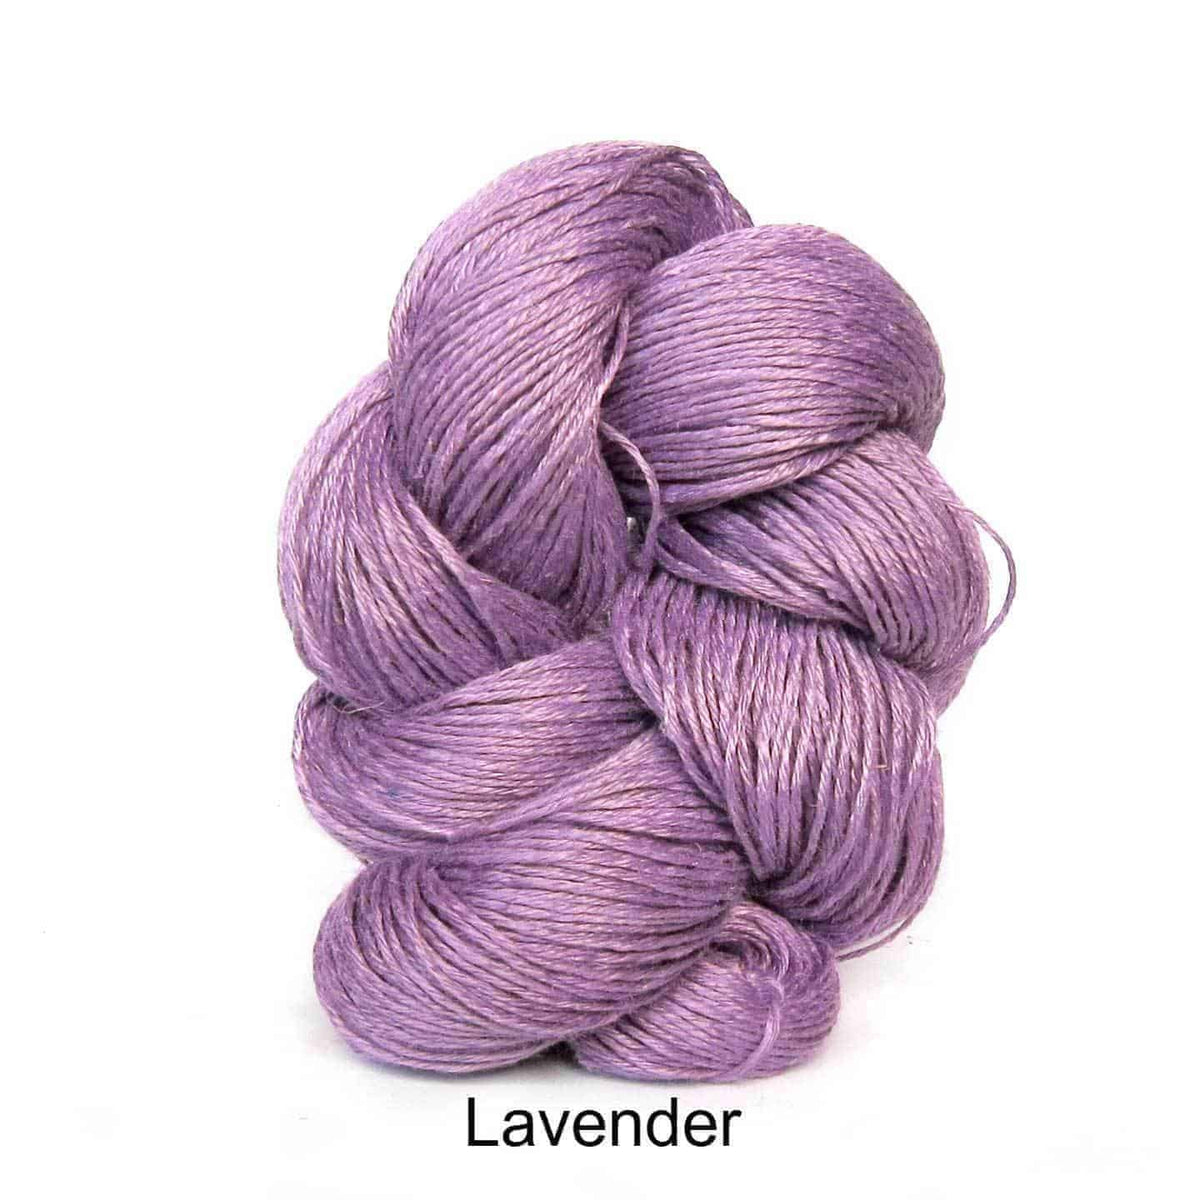 Euroflax Wet Spun Linen Yarn Lavender 2724